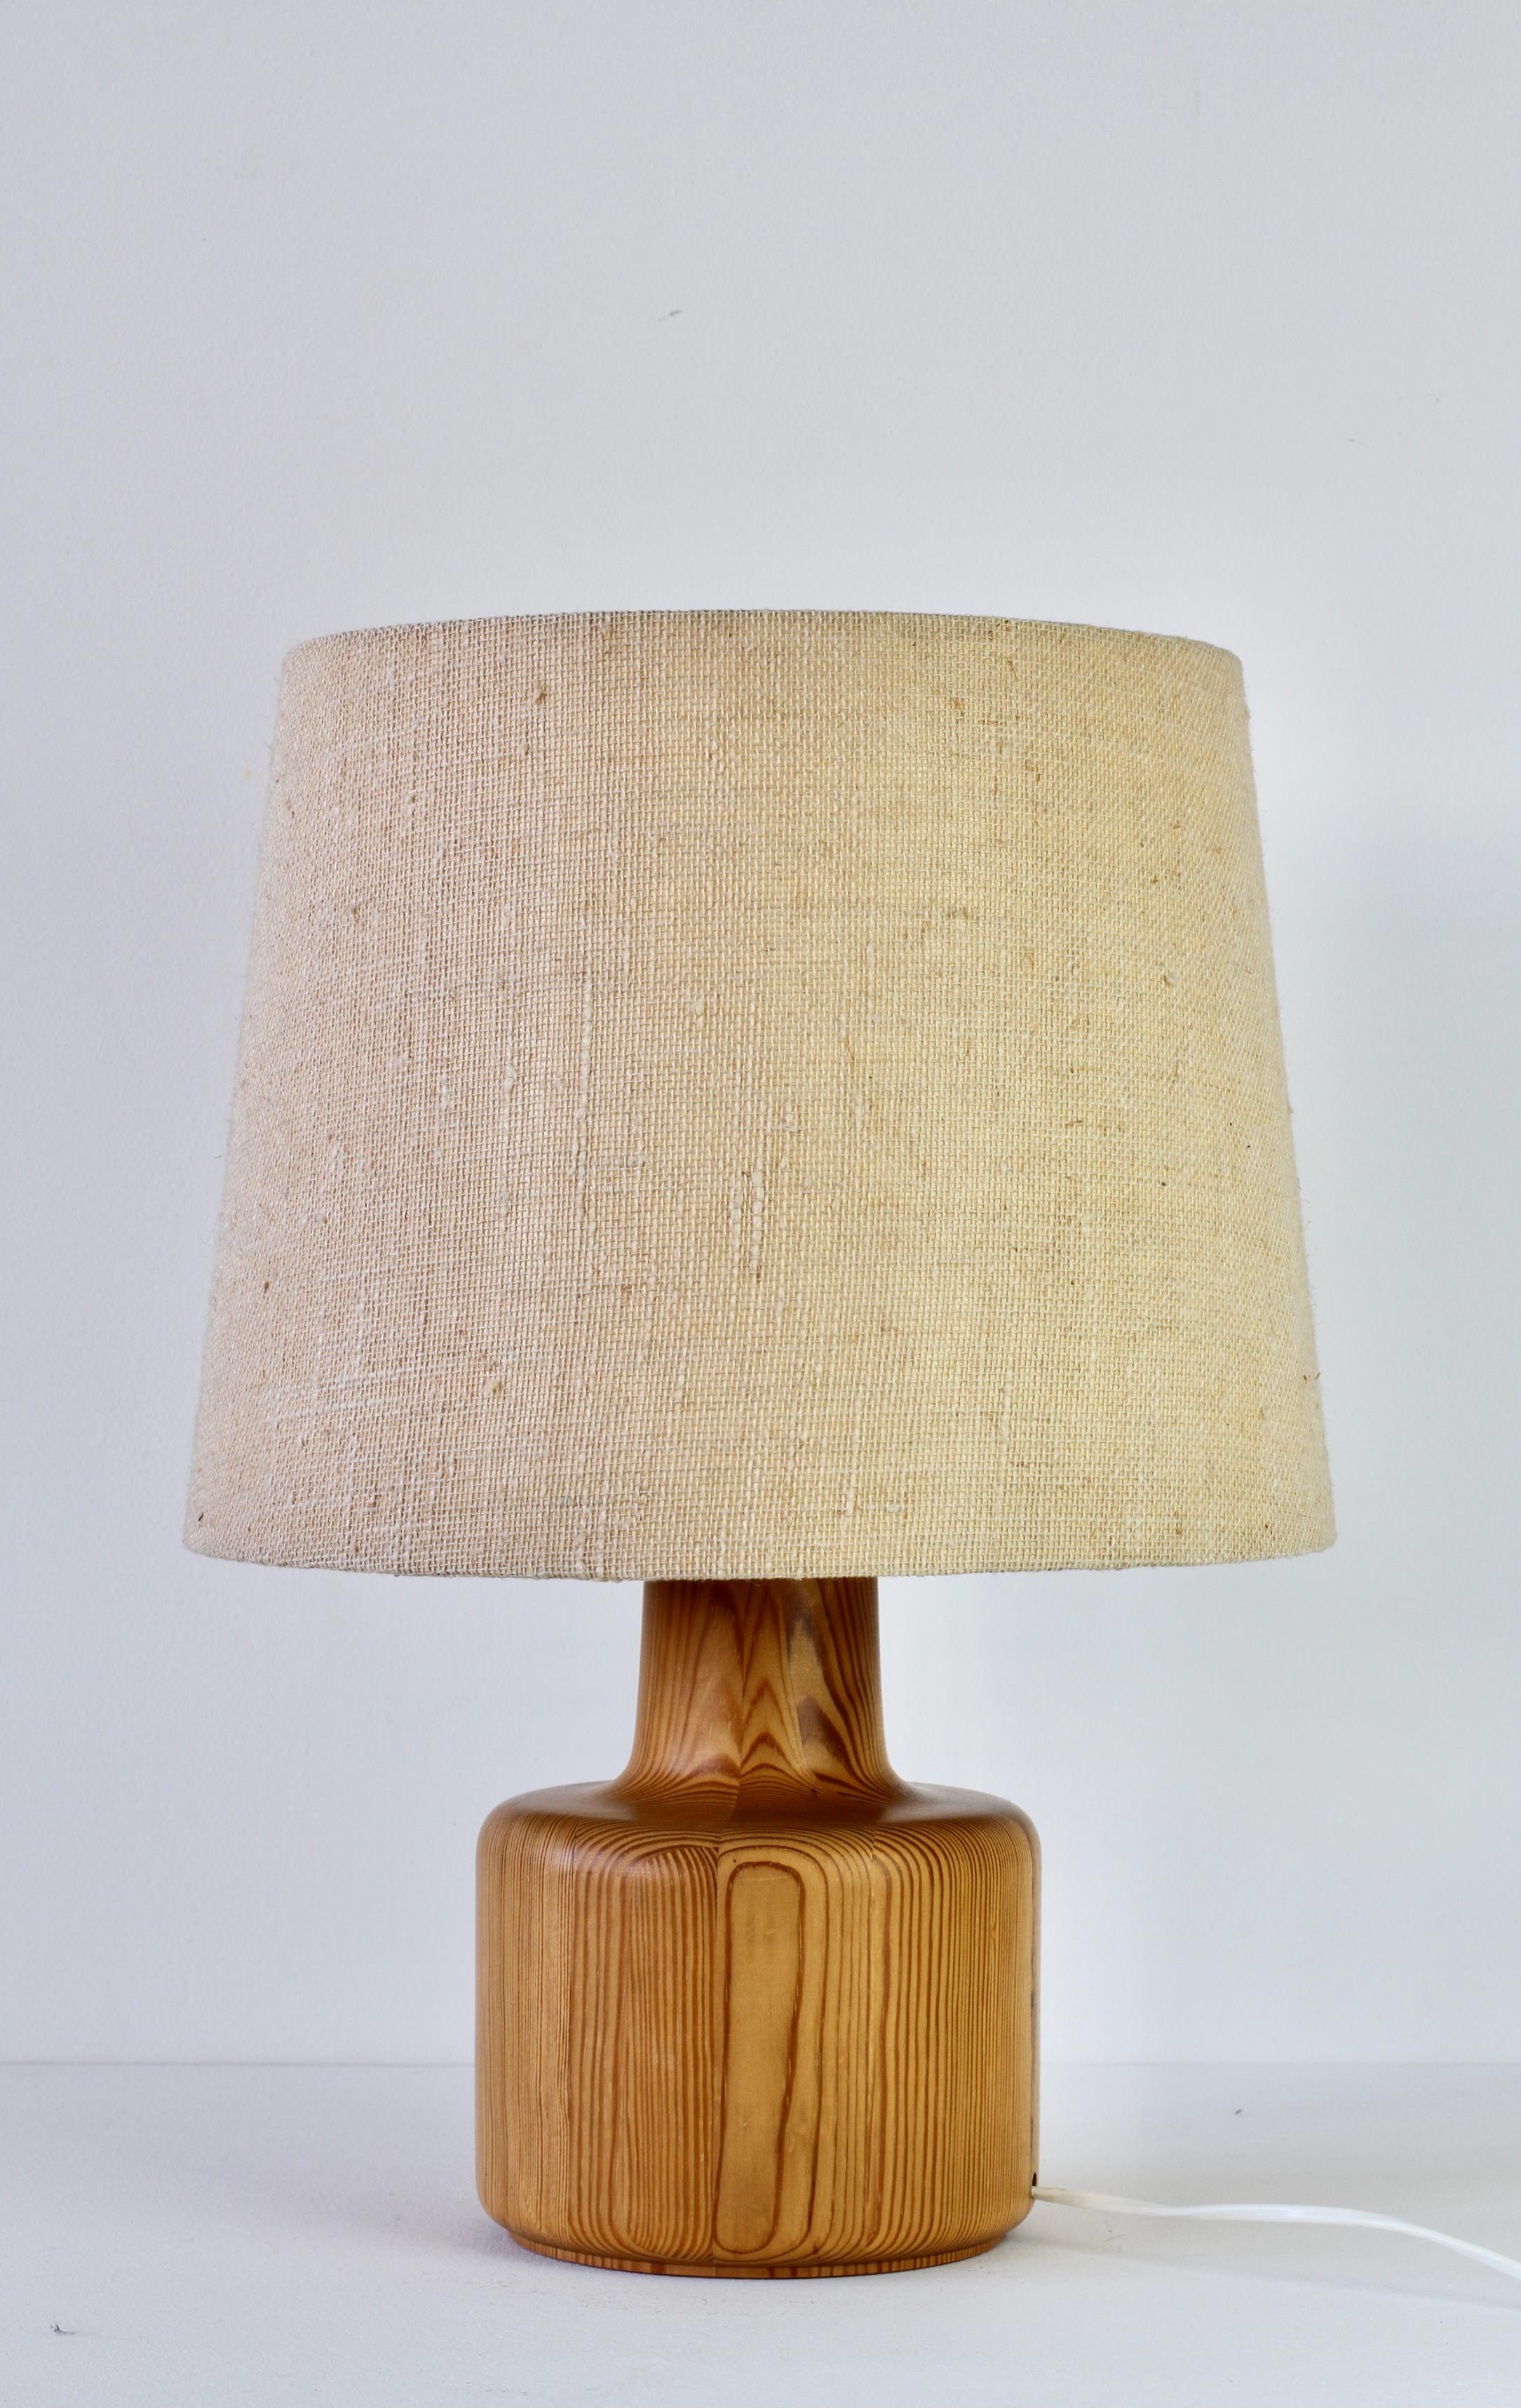 1970s Large Scandinavian Style Pine Wood Table Light Lamp Original Fabric Shade 7